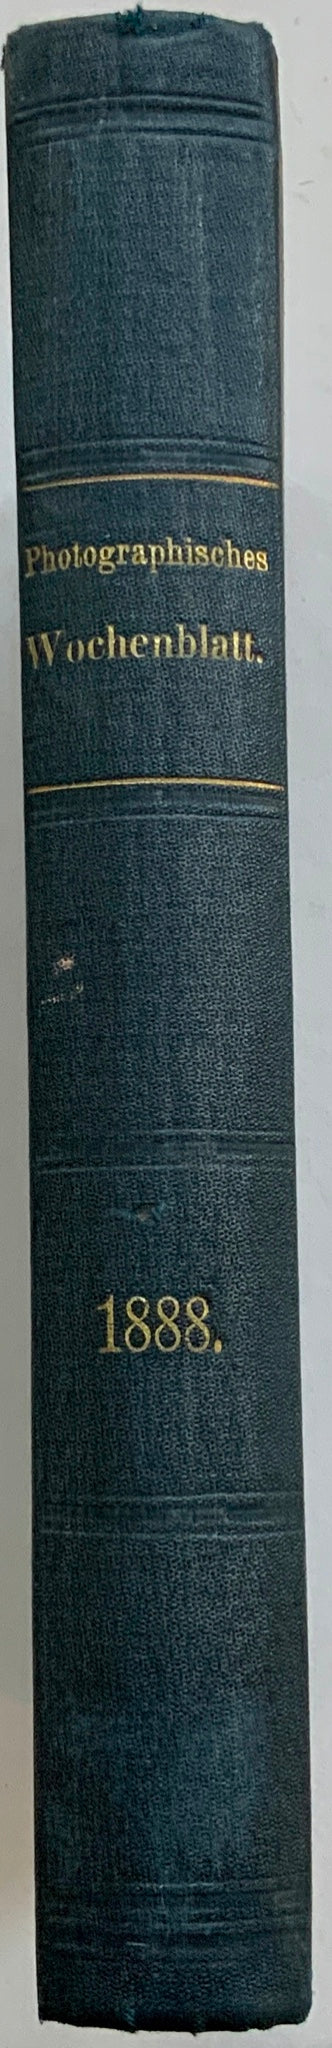 1888 Photographische Wochenblatt Stolze with orig. Photos - Book